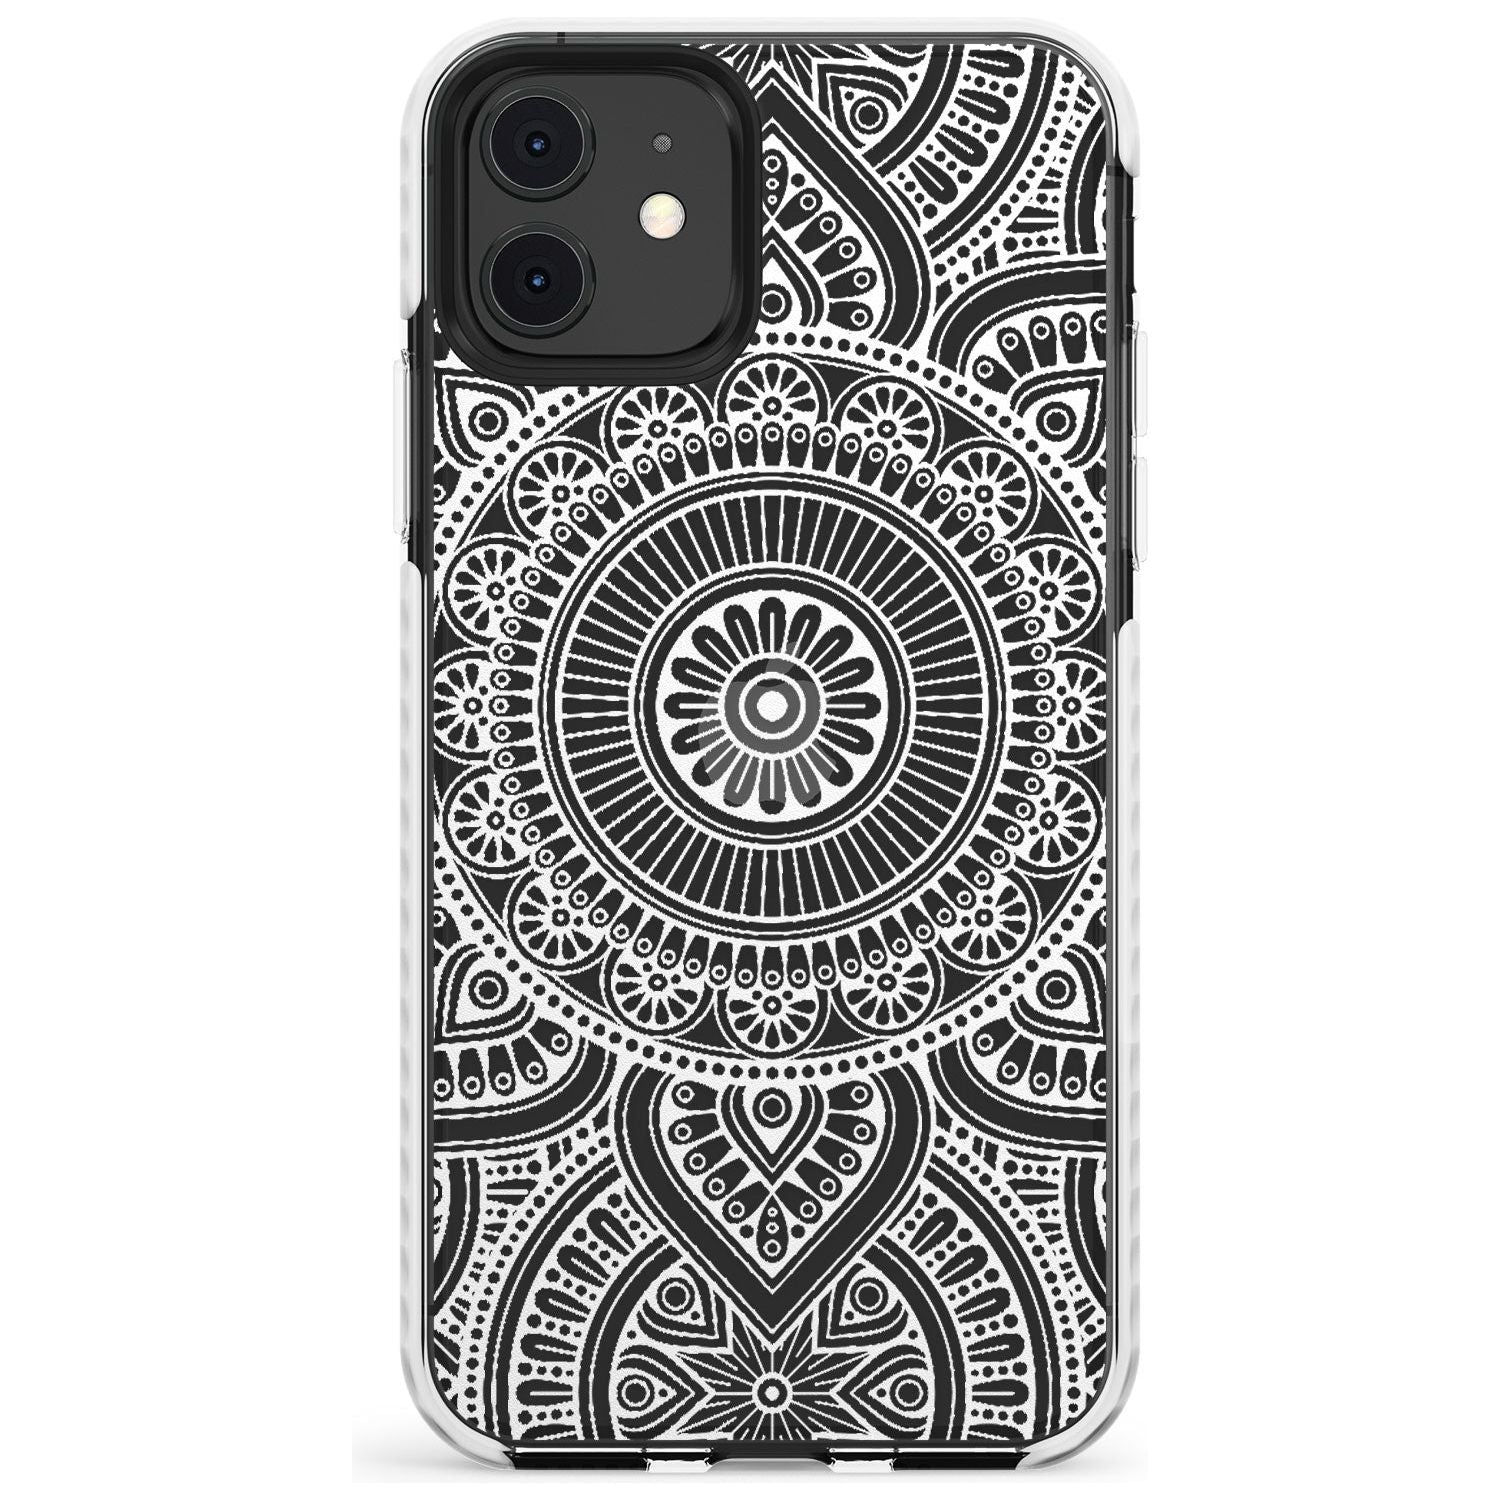 White Henna Flower Wheel Impact Phone Case for iPhone 11